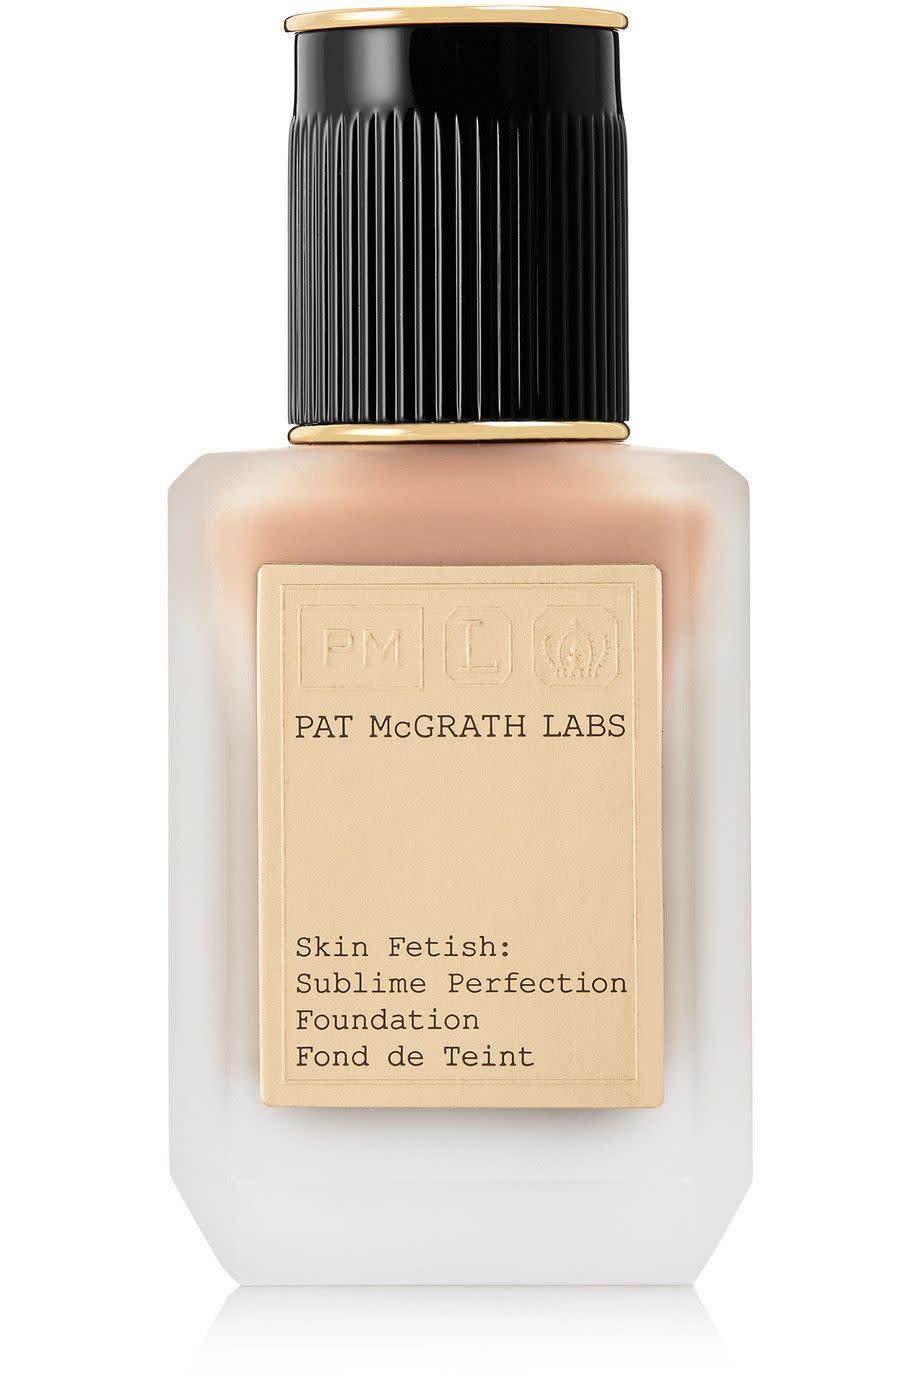 Pat McGrath Labs Skin Festish Foundation, £60